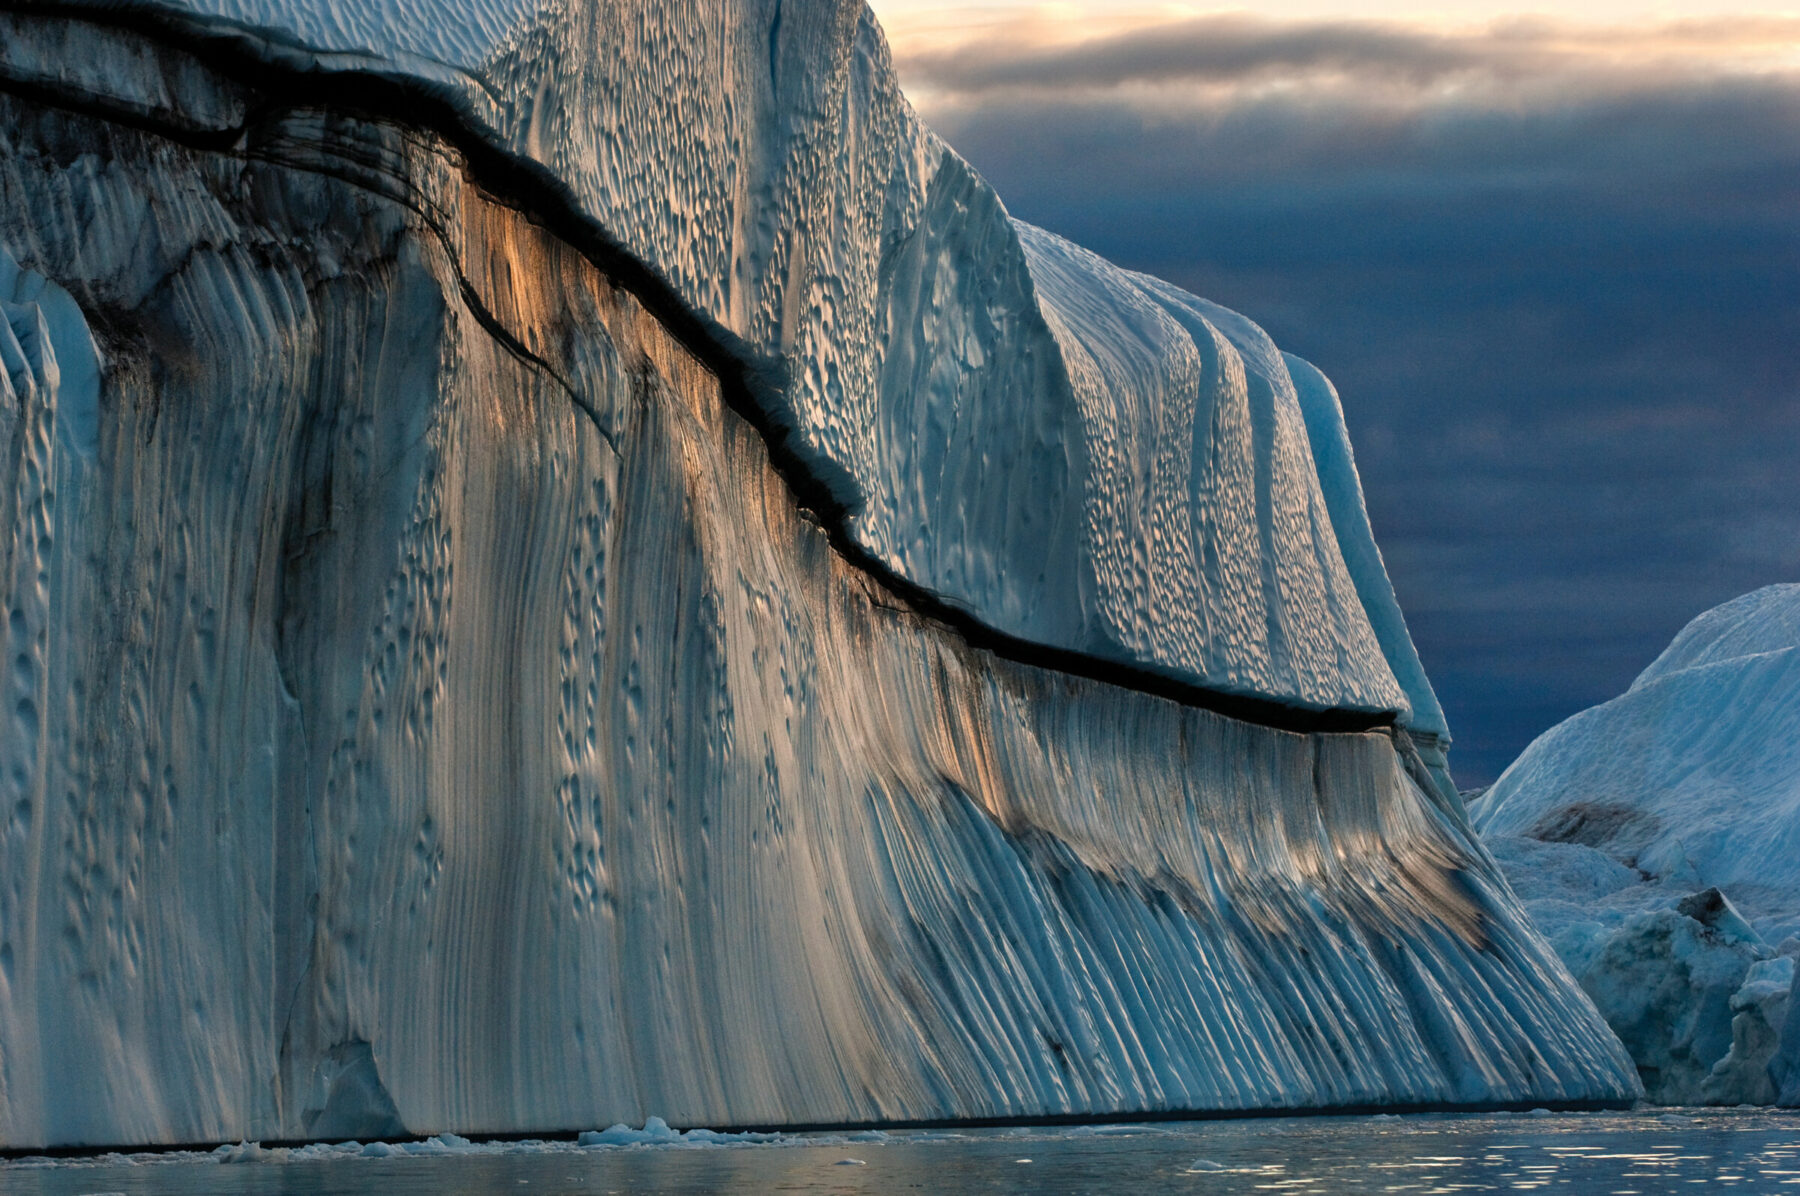 James Balog, Copper Berg, Jakobshavn Isbræ, Greenland, August 24, 2007. Icebergs that have rolled over and been scalloped by waves metamorphose into fantastic shapes.